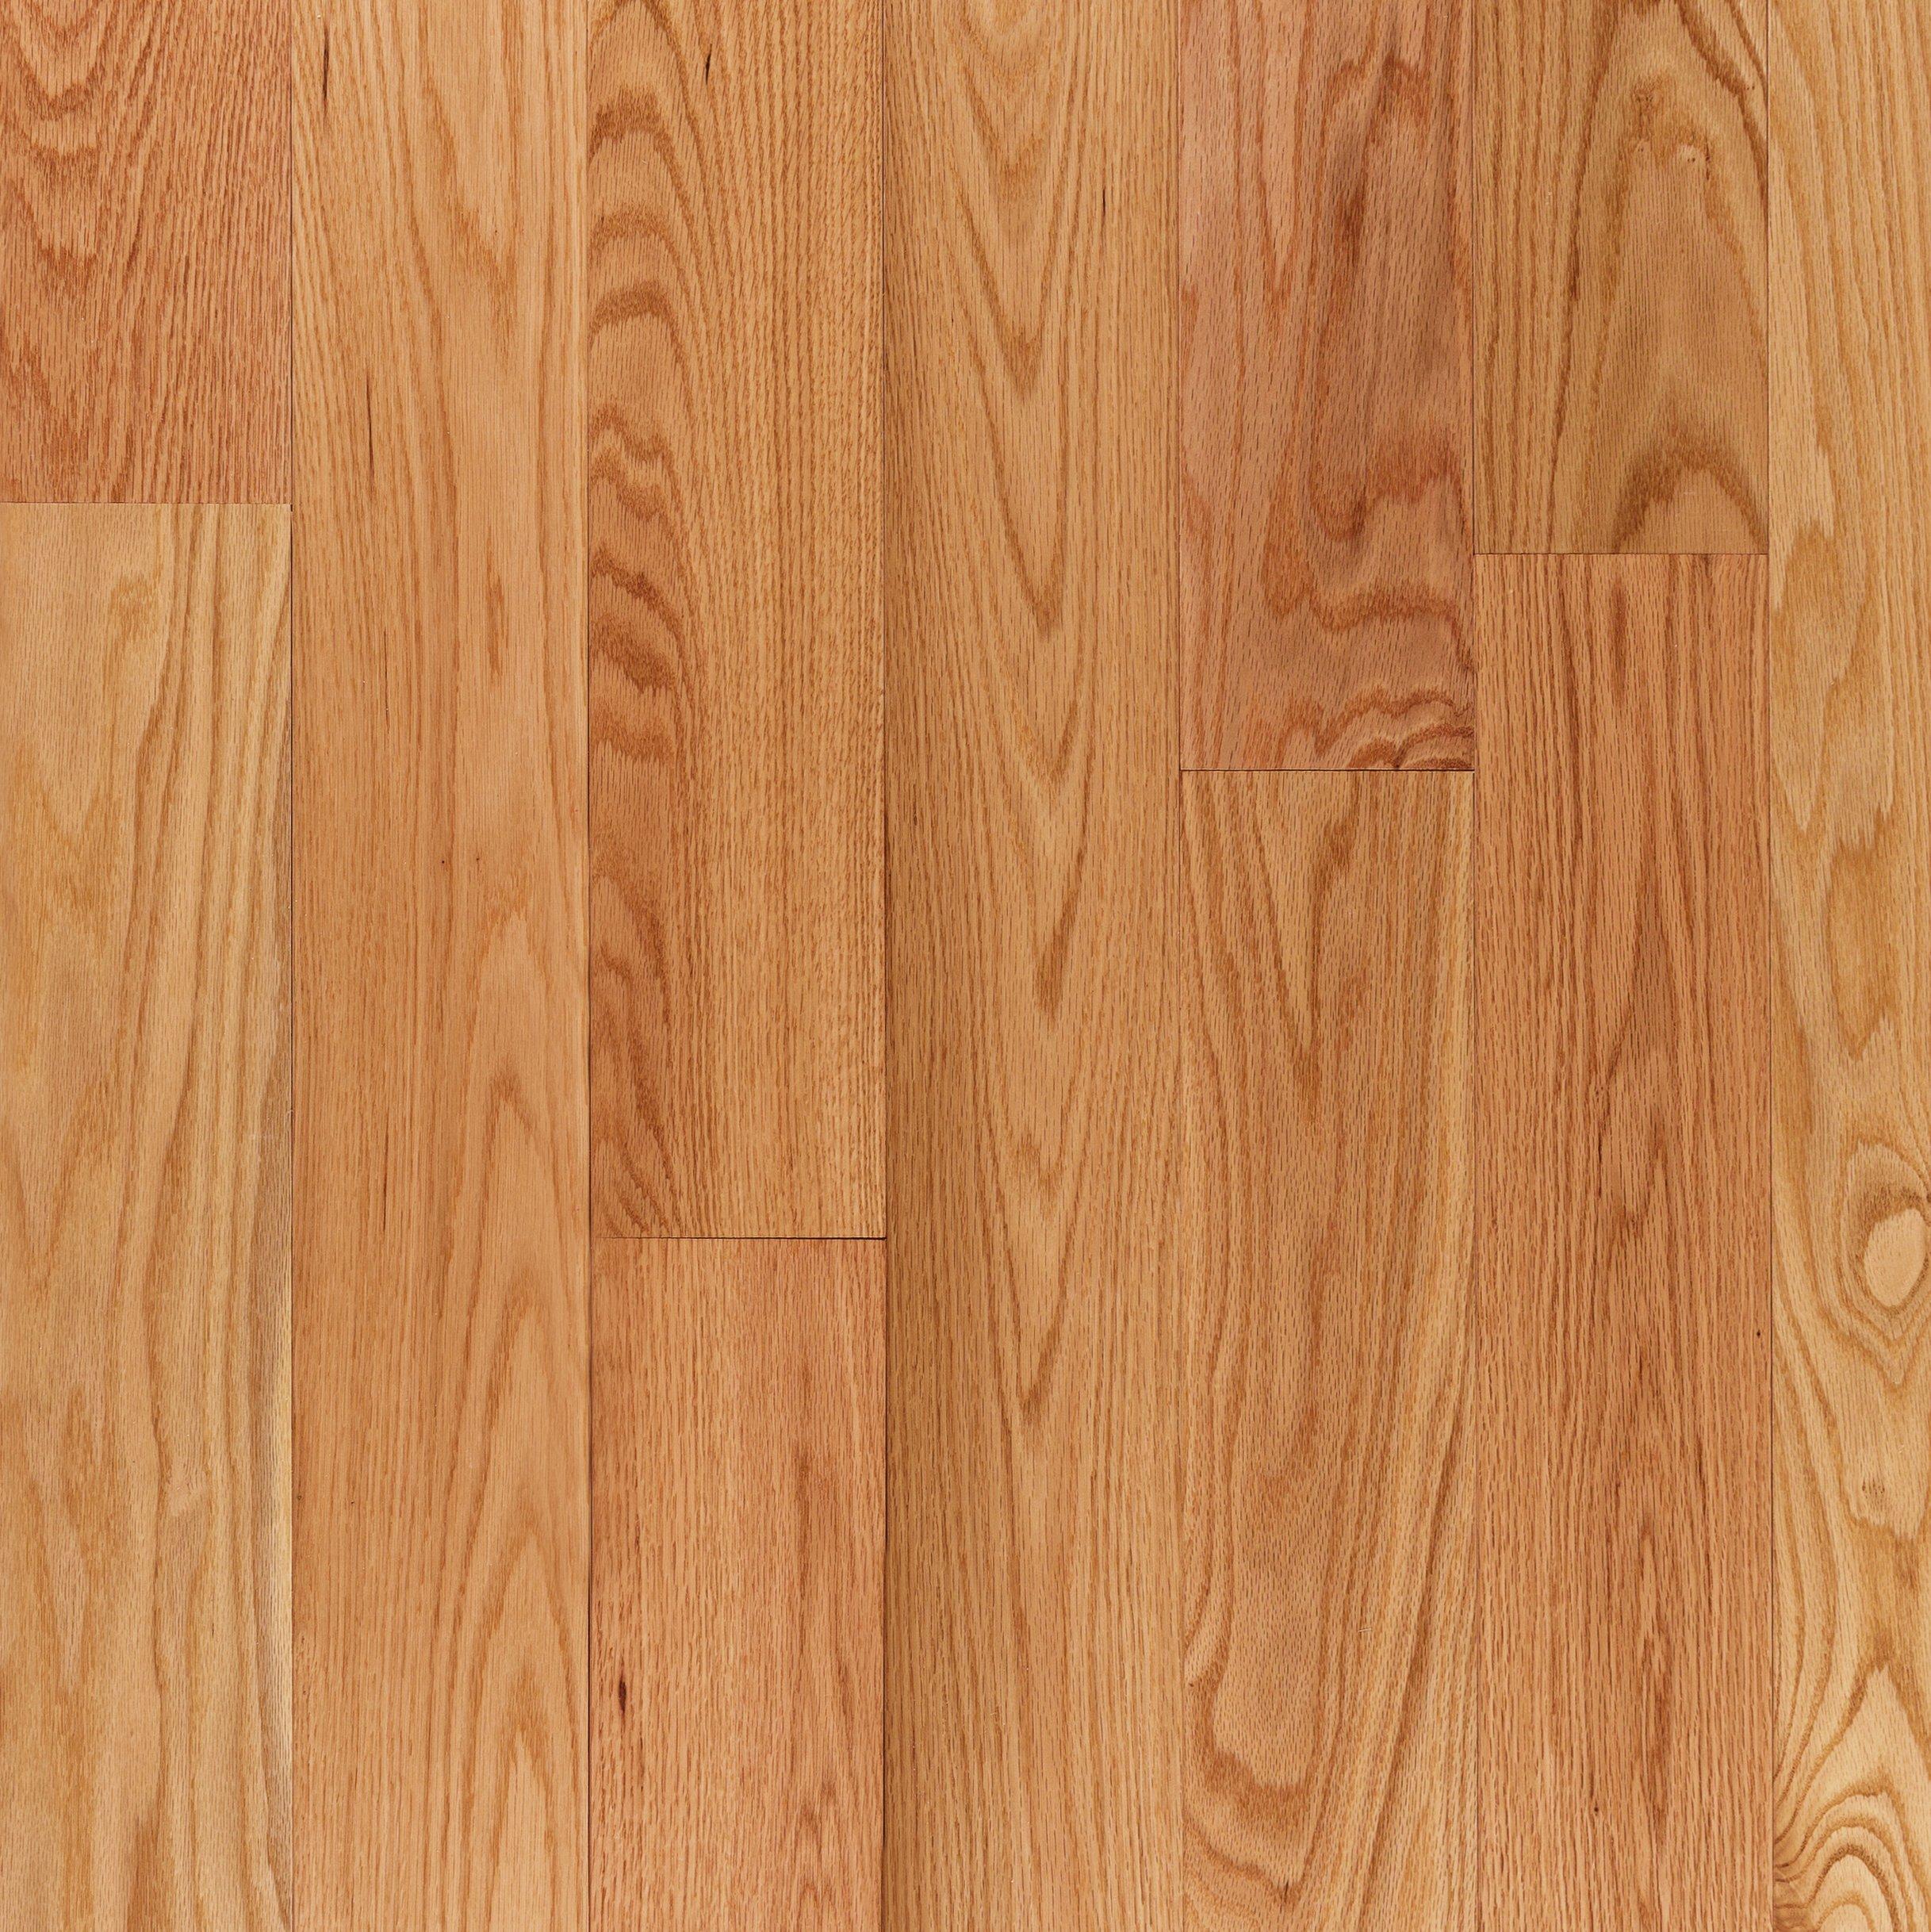 Red Oak Smooth Solid Hardwood Floor, Select Oak Hardwood Flooring